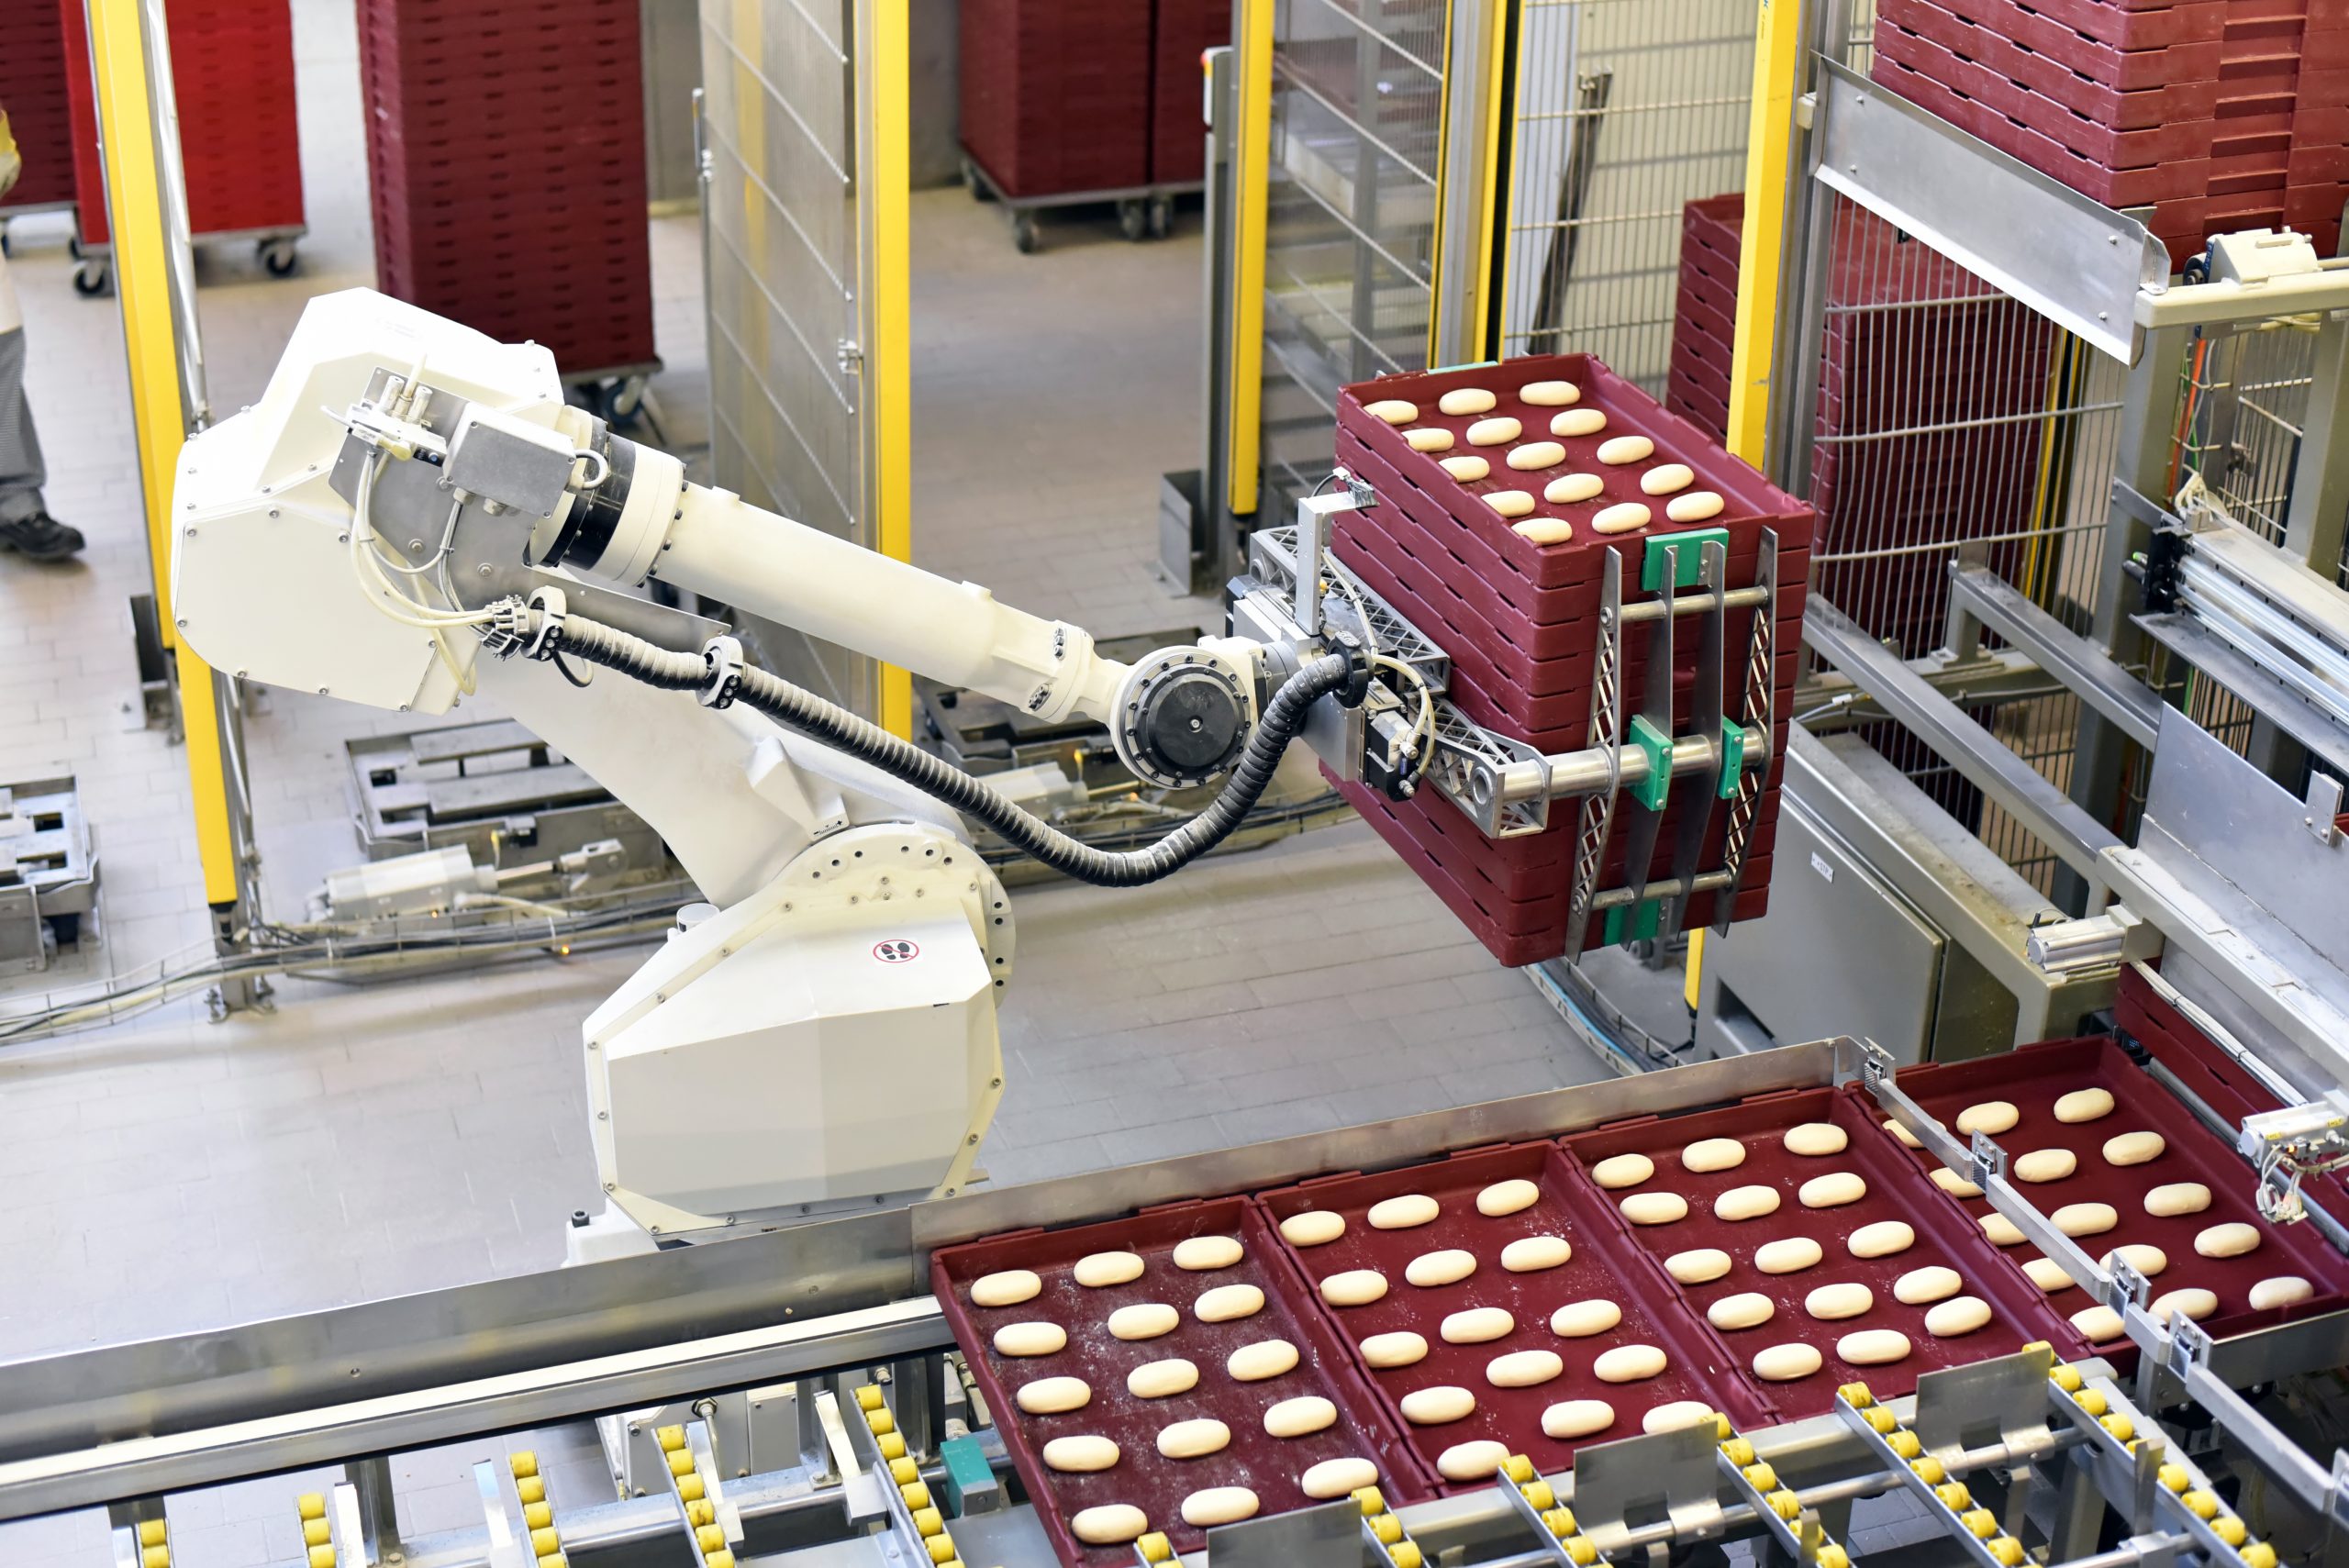 robotic arm placing bakery item onto conveyor belt